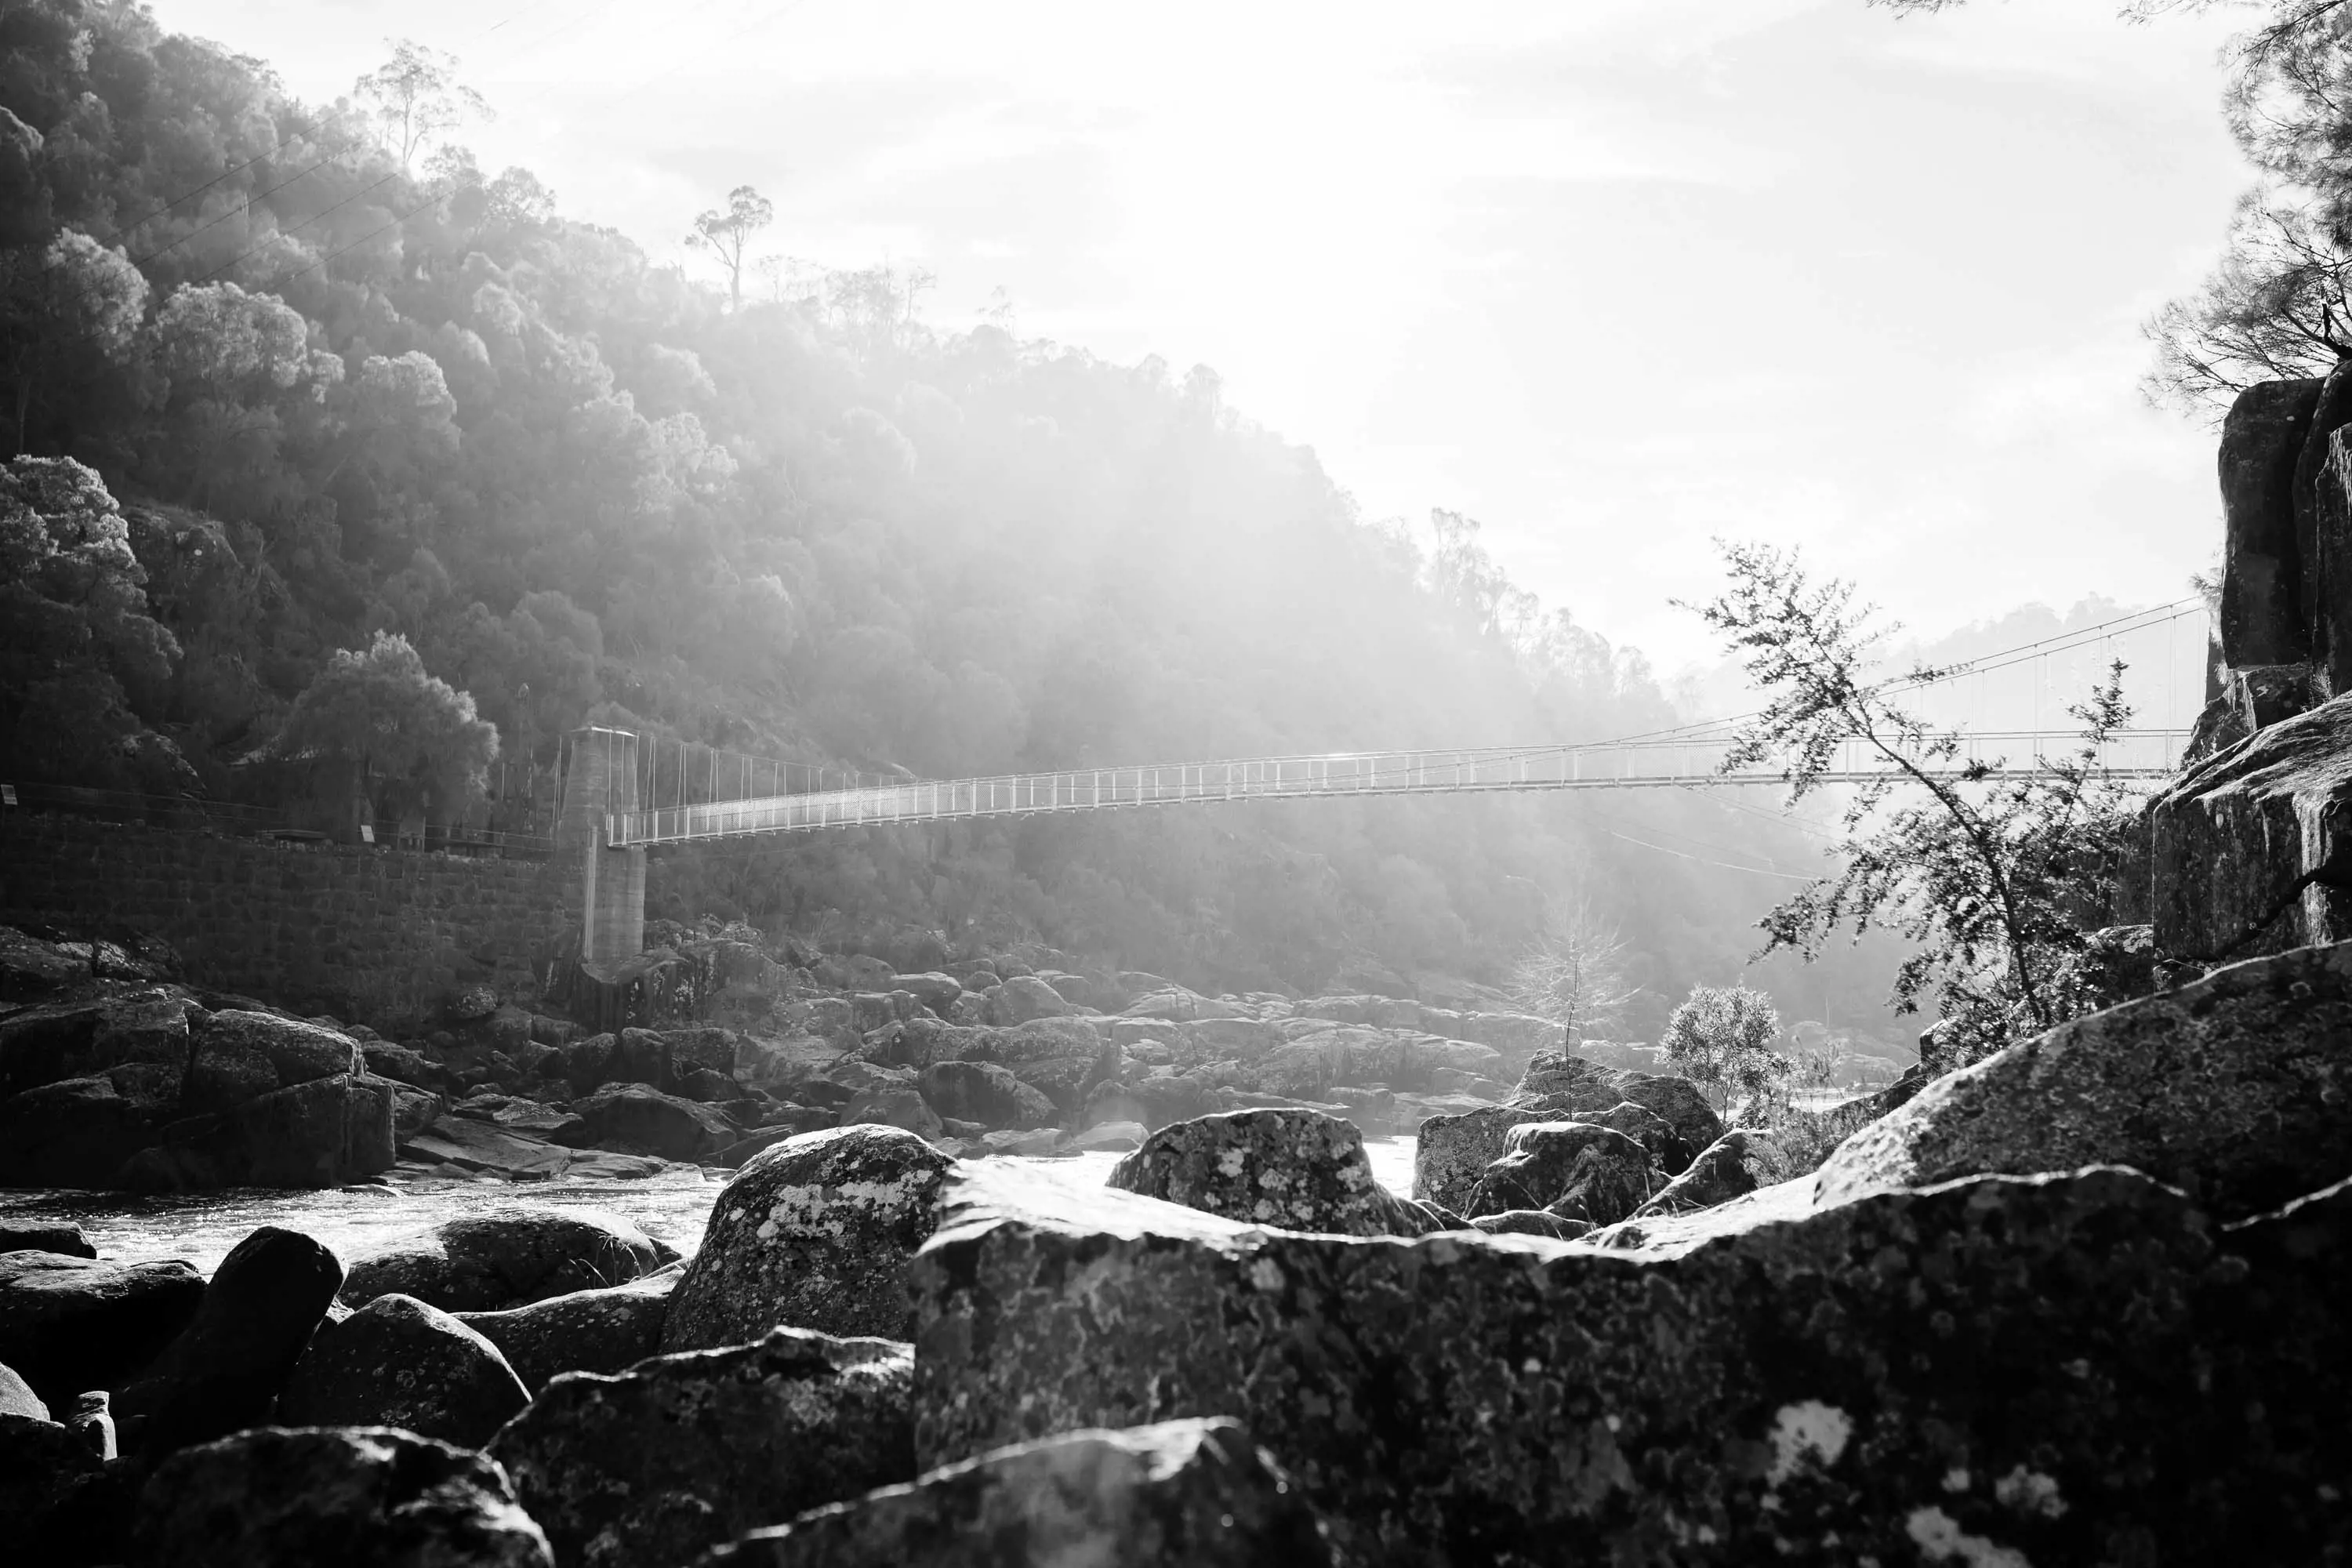 A long, thin bridge extends over a rocky river. sunlight streams through clouds overhead.